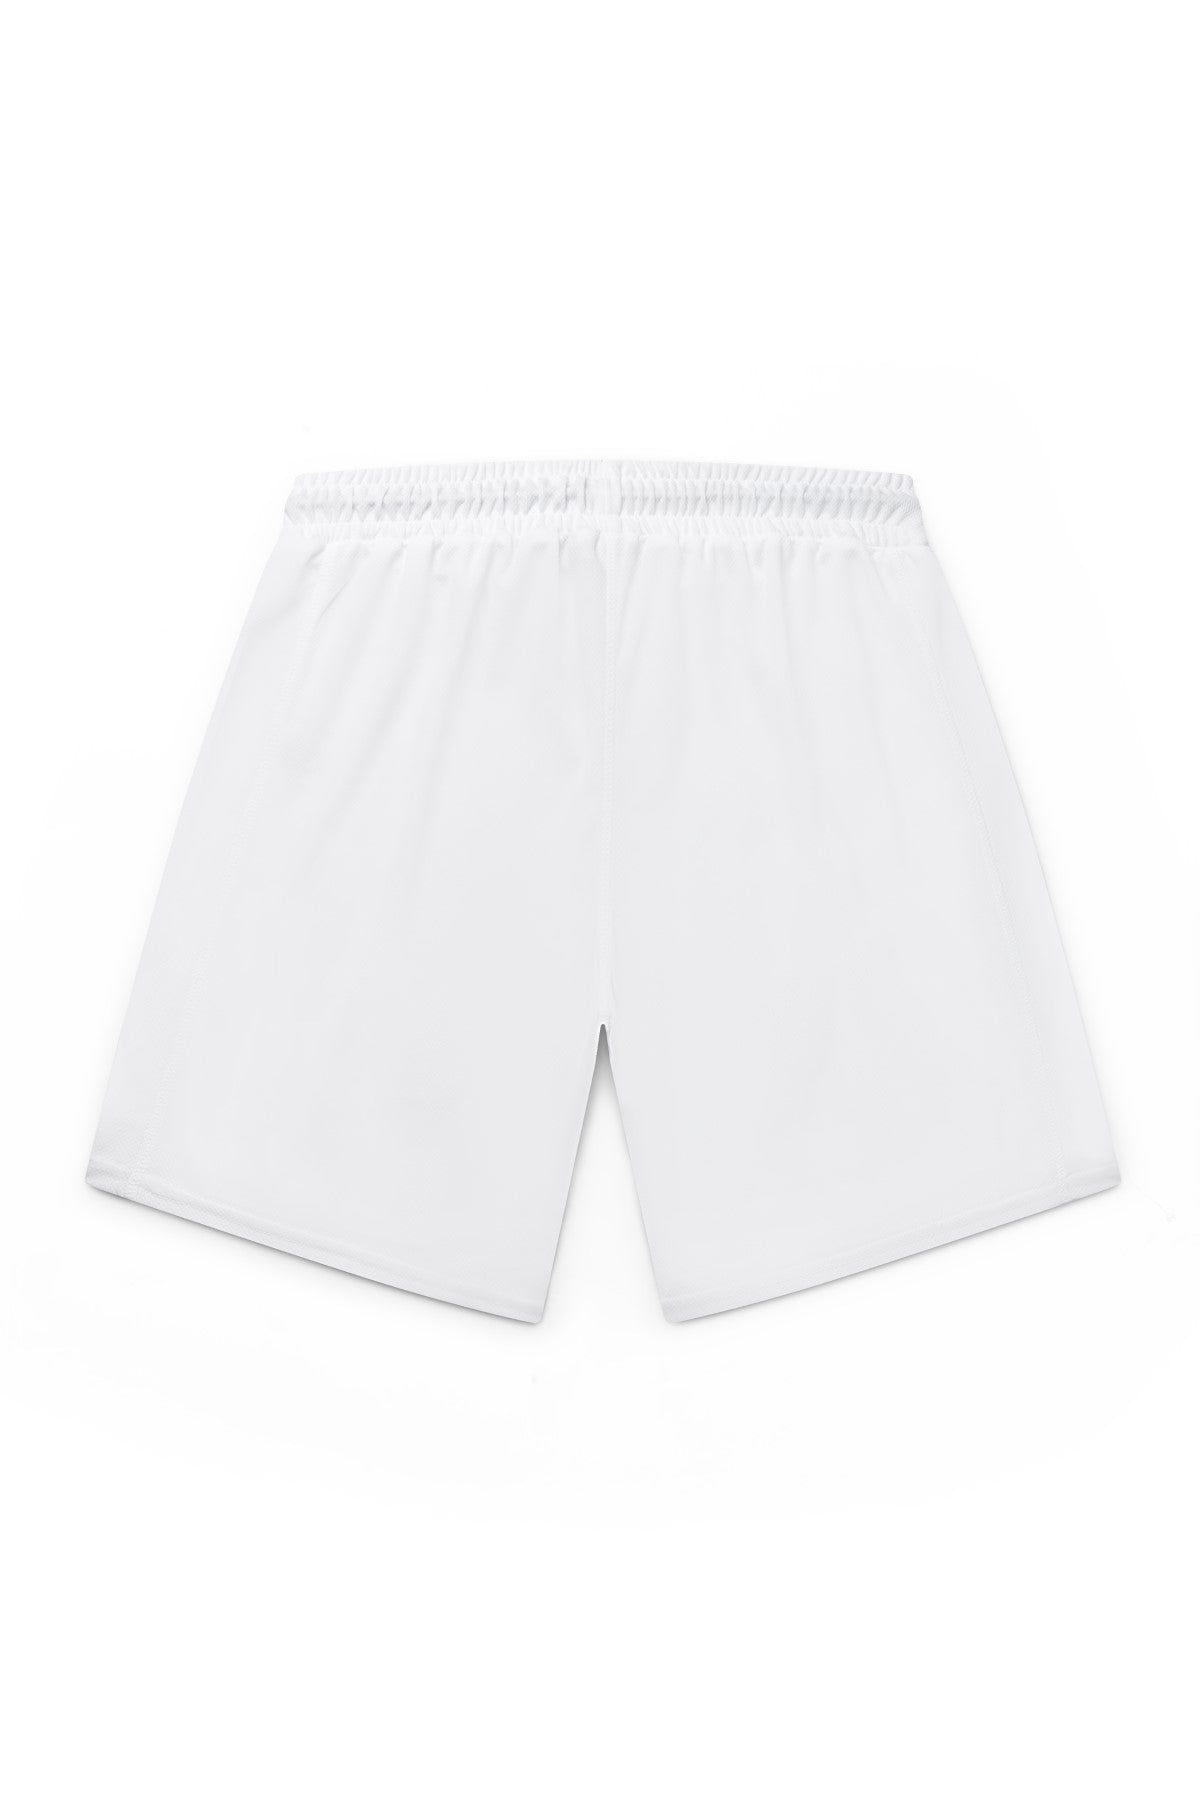 PLAYERSHOME x TRUST Shorts - White